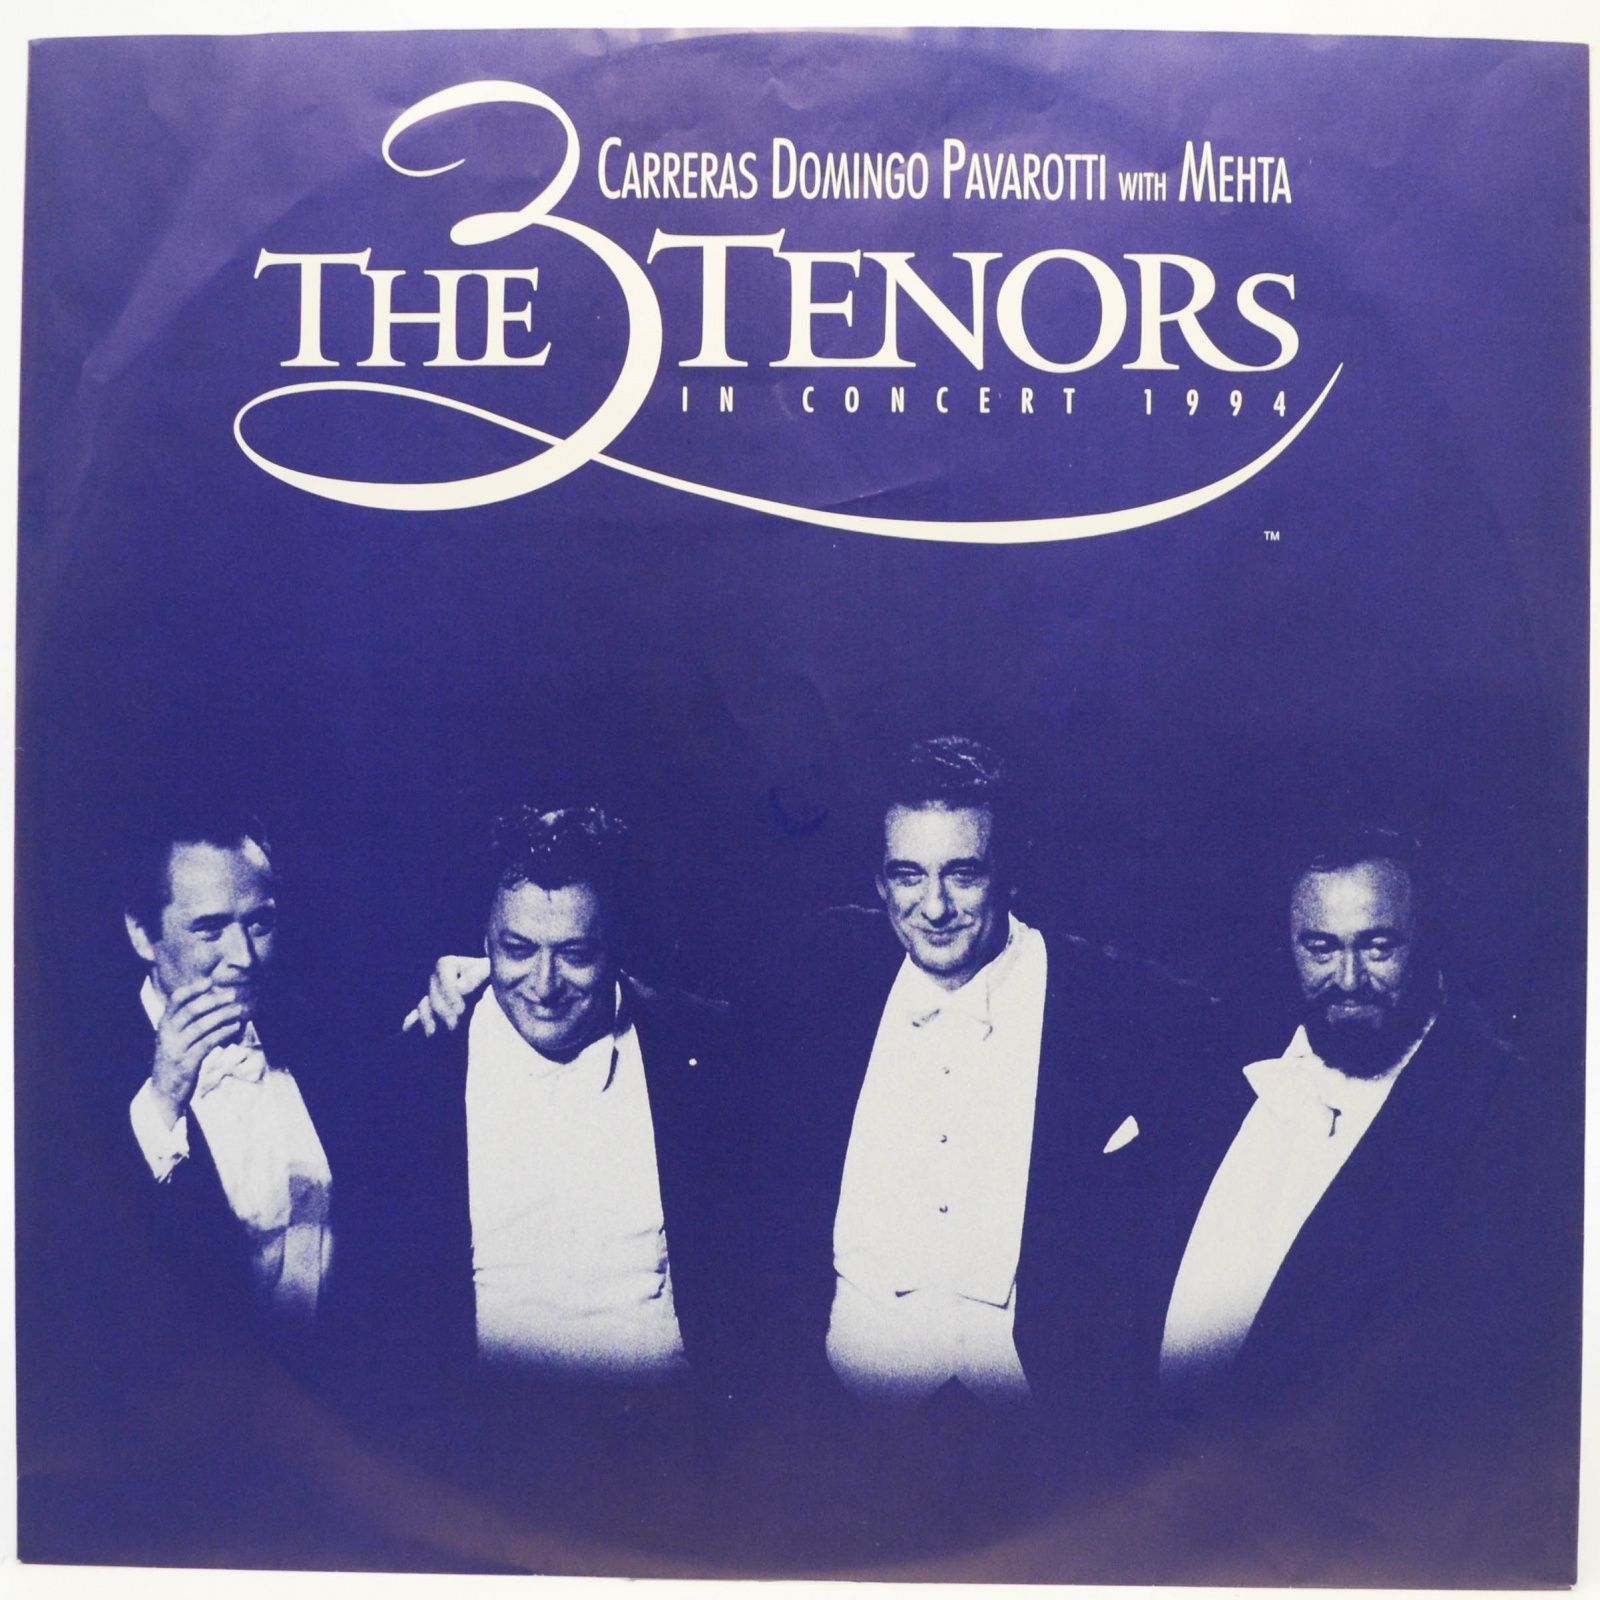 Carreras - Domingo - Pavarotti with Mehta — The 3 Tenors In Concert 1994 (2LP), 1994